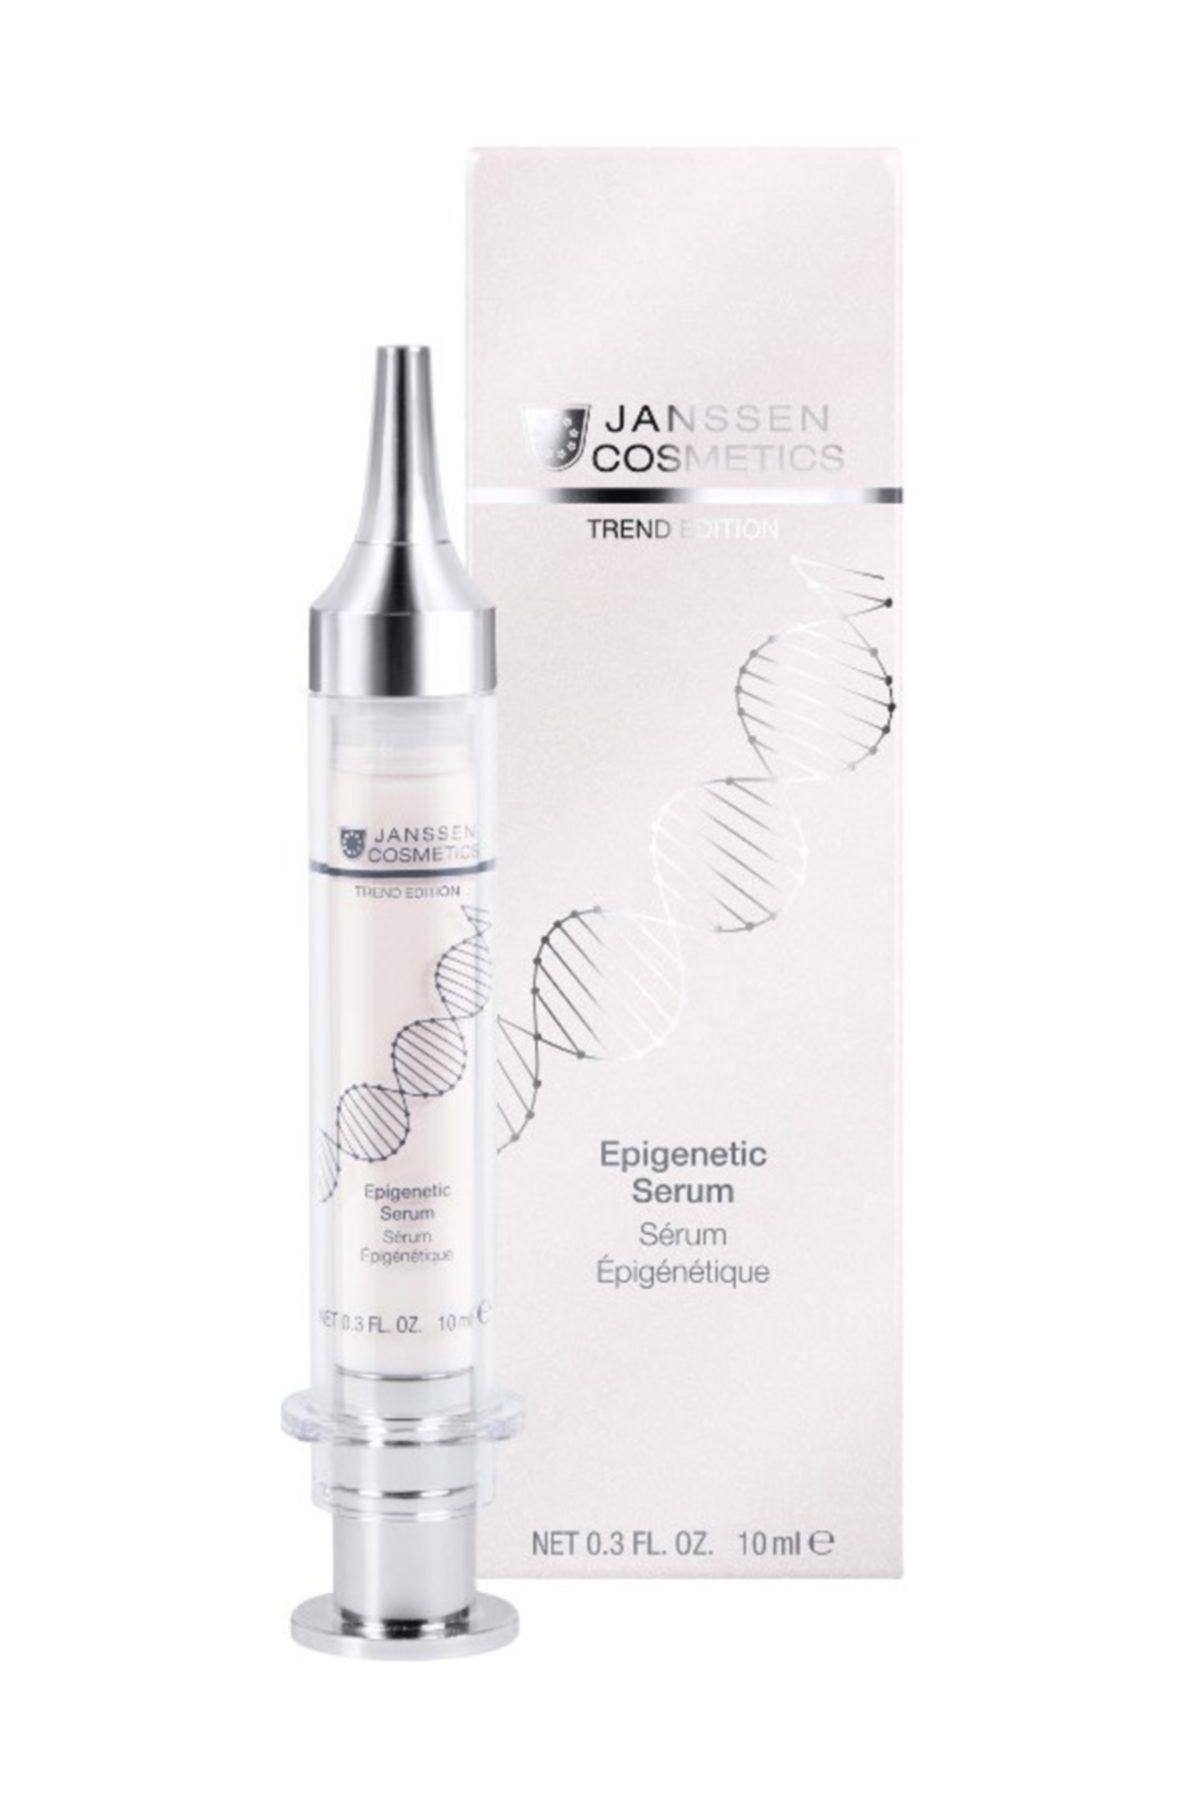 Janssen Cosmetics Trend Edition Epigenetic Serum 10 Ml